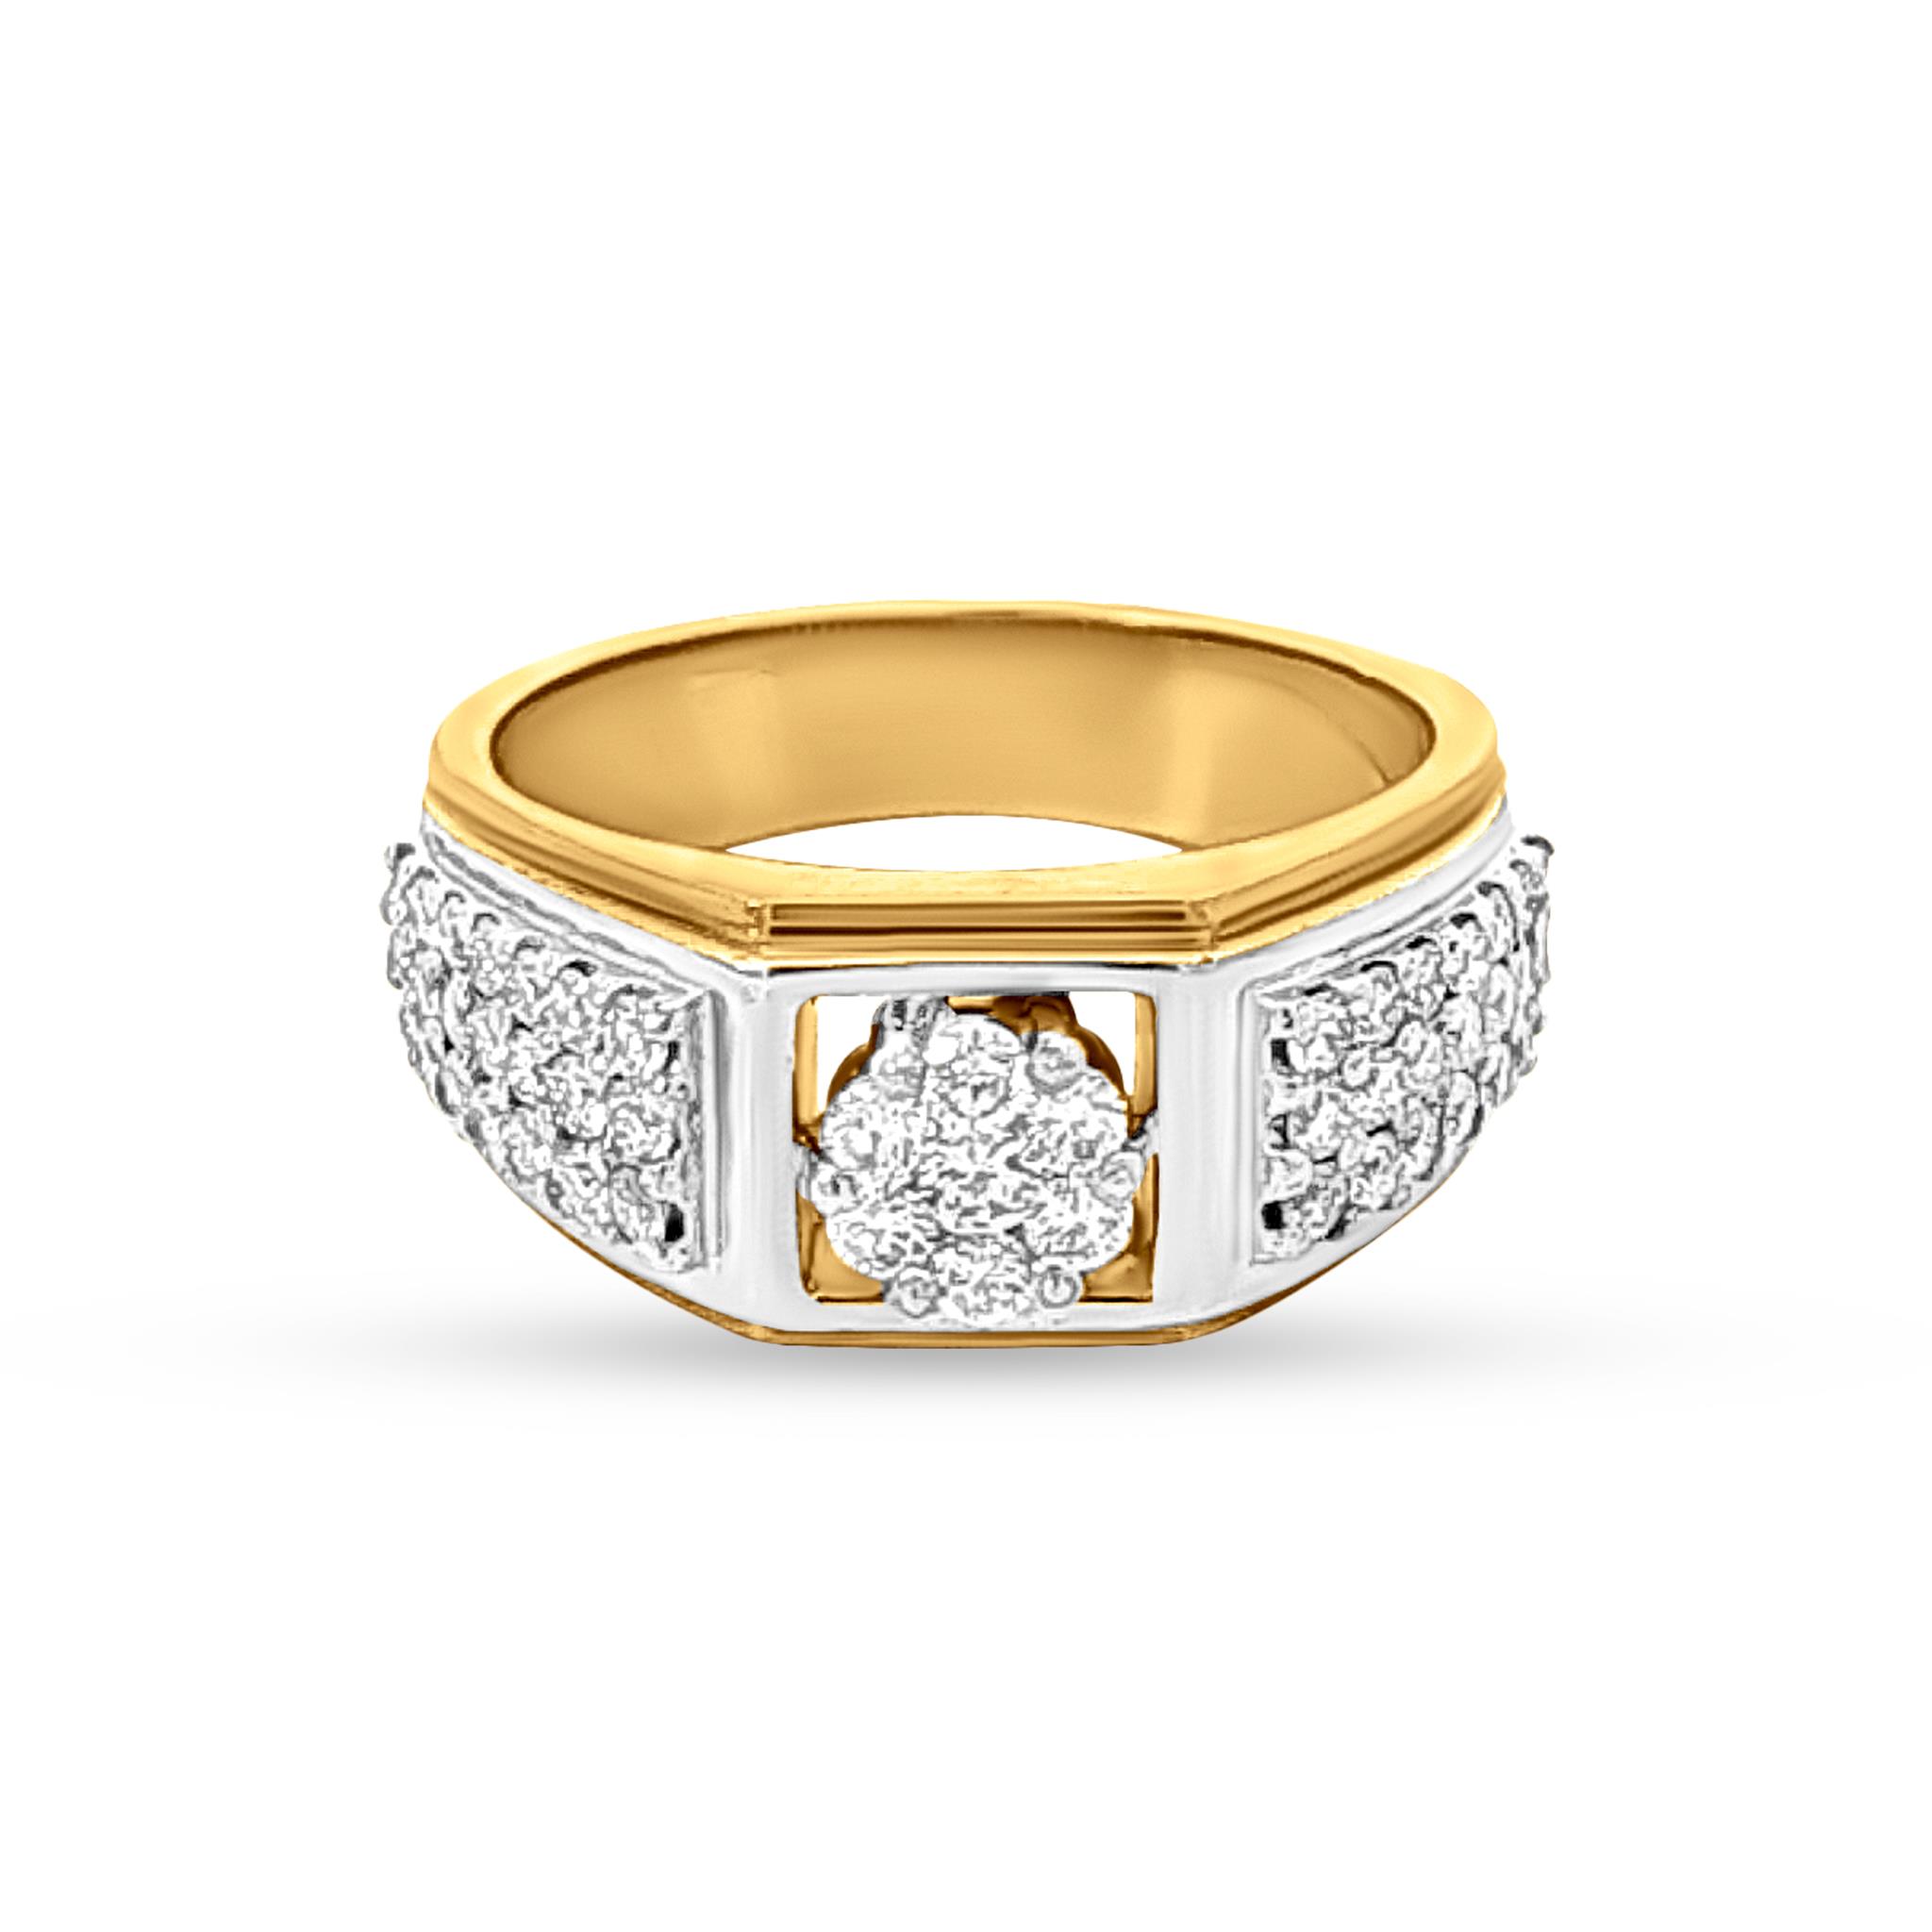 Buy DISHIS 18k BIS Hallmark Yellow Gold Diamond Ring for Women 18 at  Amazon.in